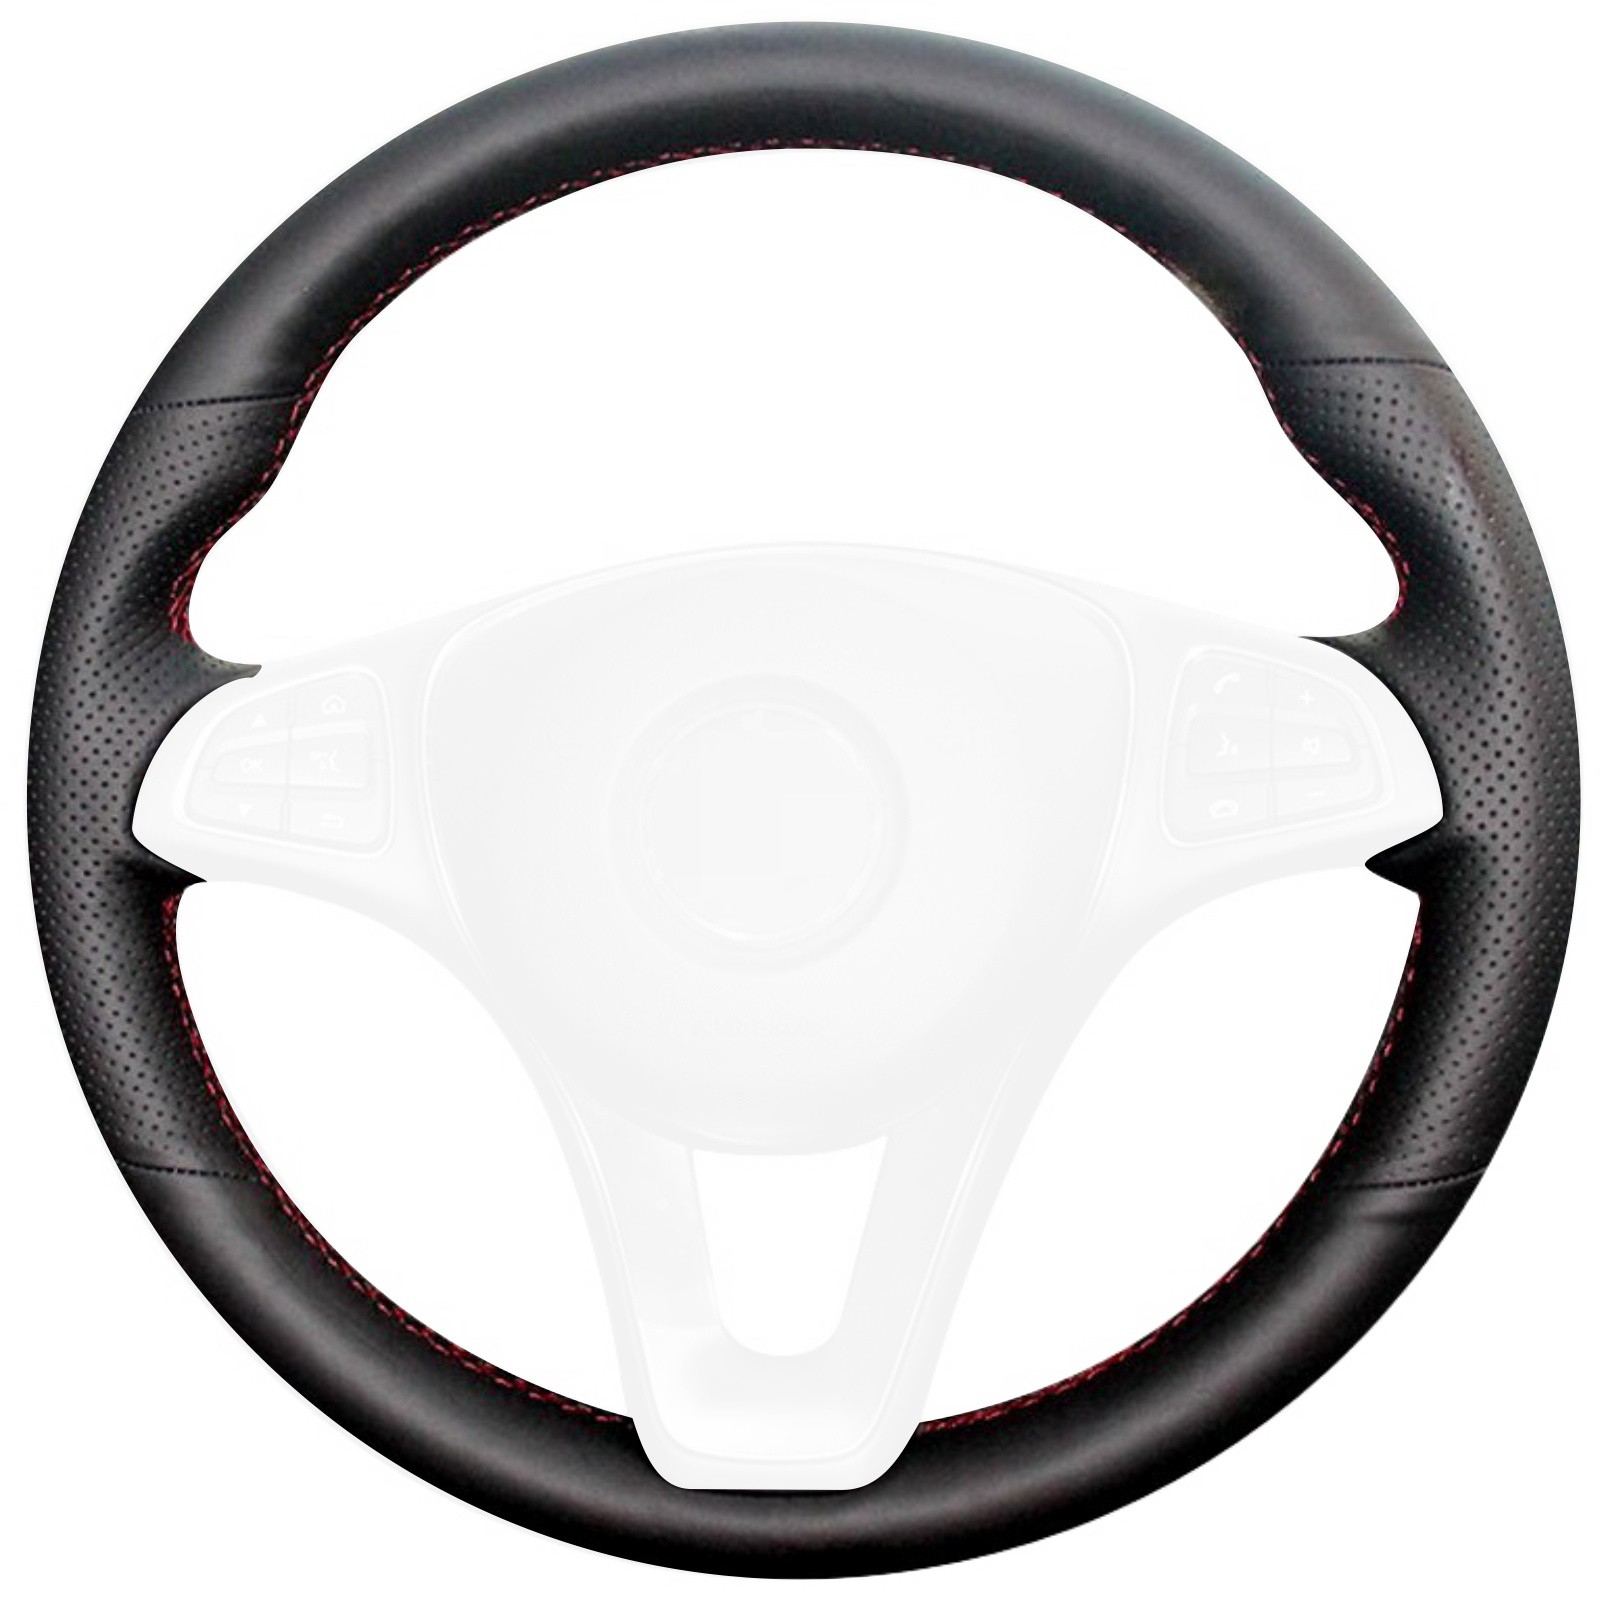 2010-18 Mercedes CLS C218 steering wheel cover (2015-18)